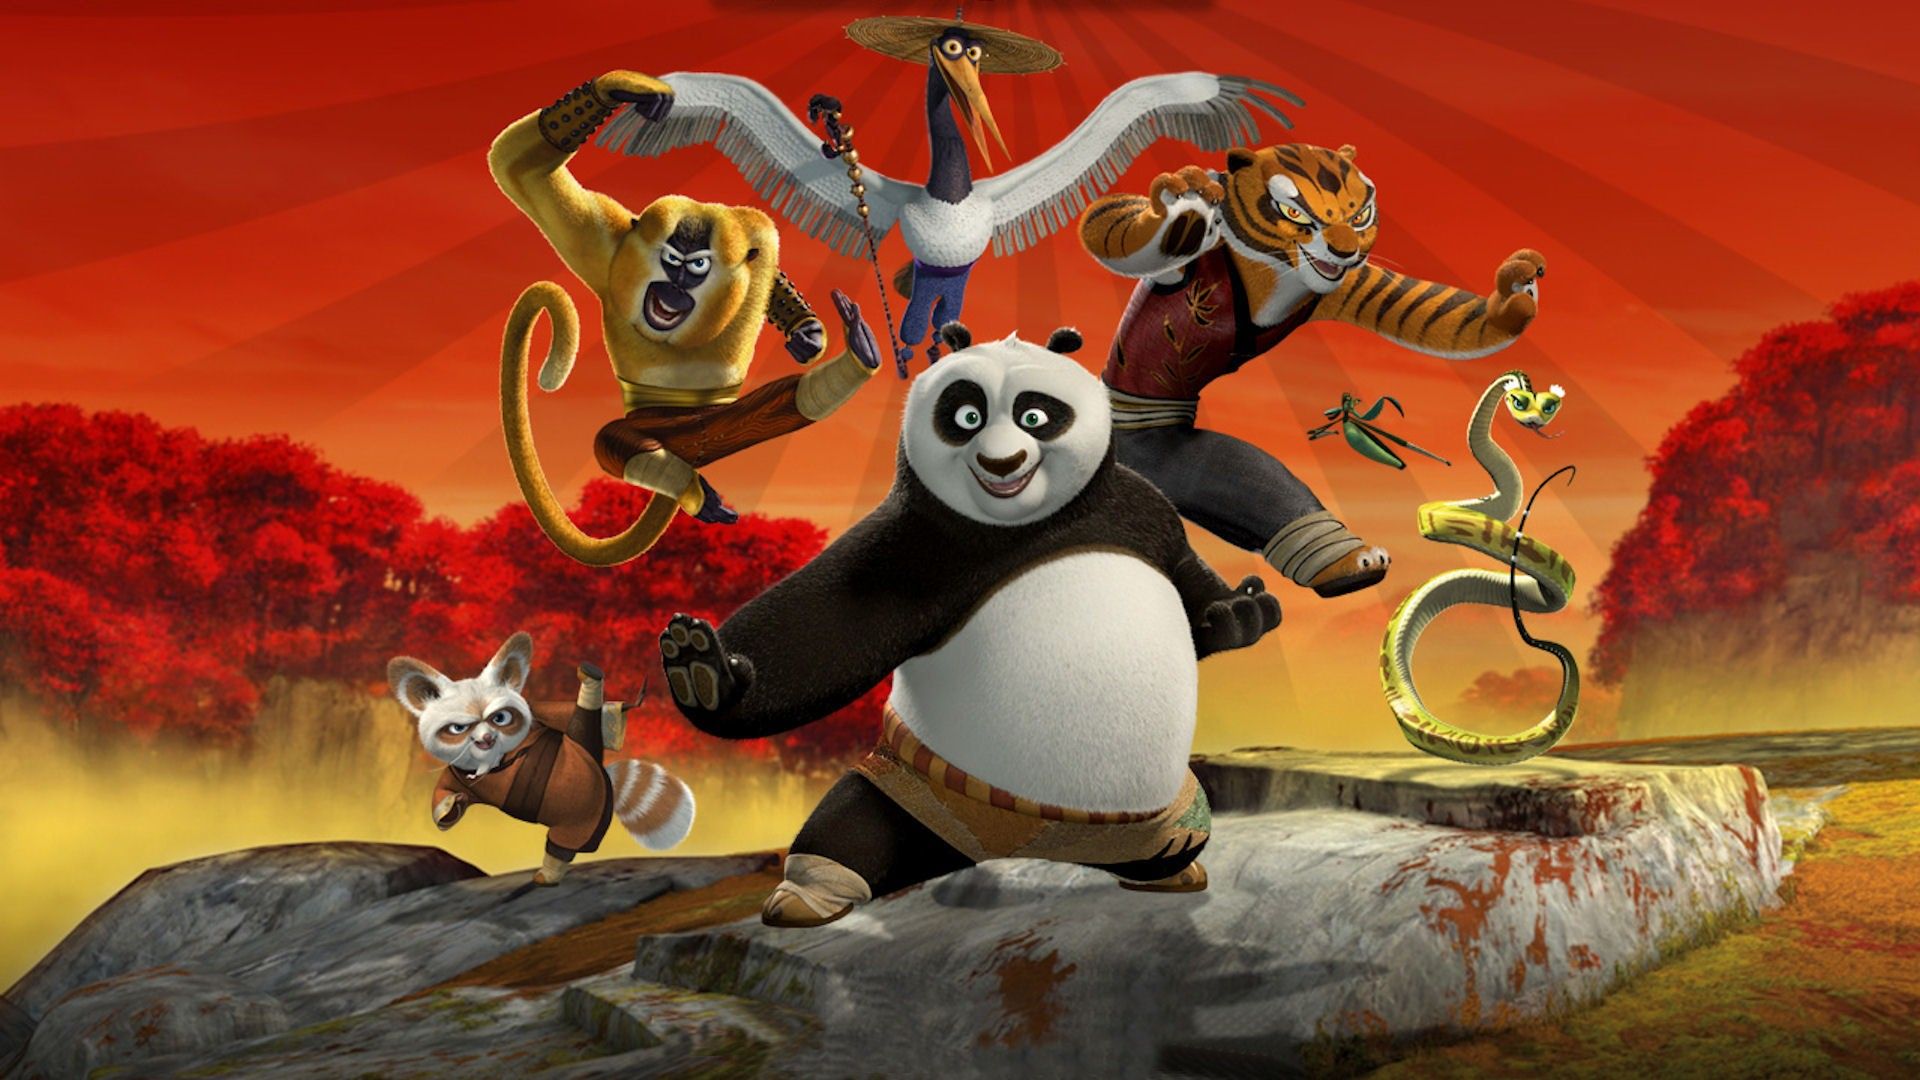 Kung Fu Panda Wallpaper Background 7571 1920 x 1080